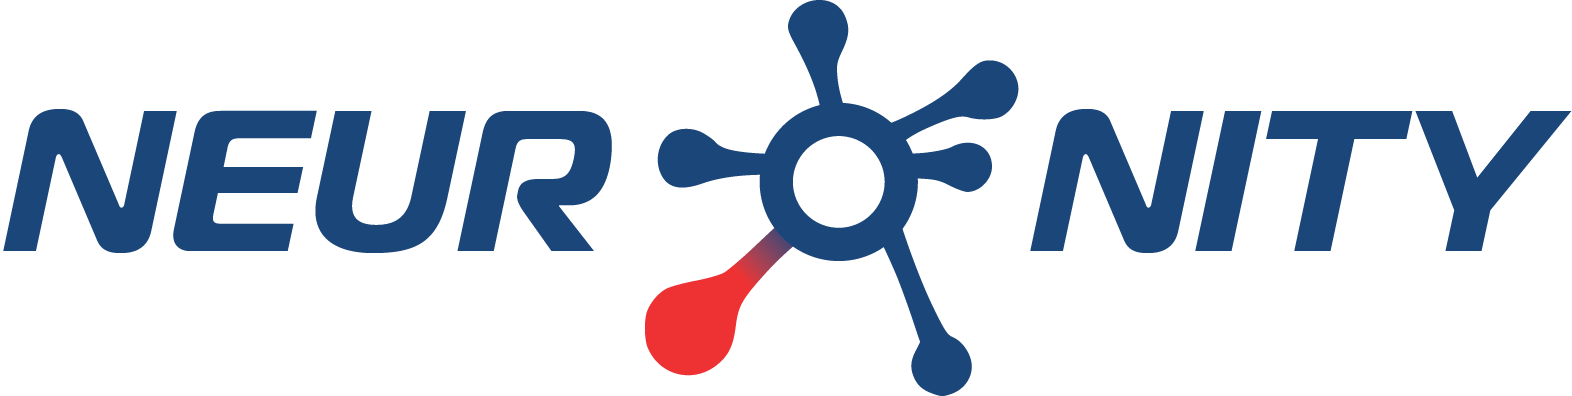 Neuronity Therapeutics, Inc. Logo